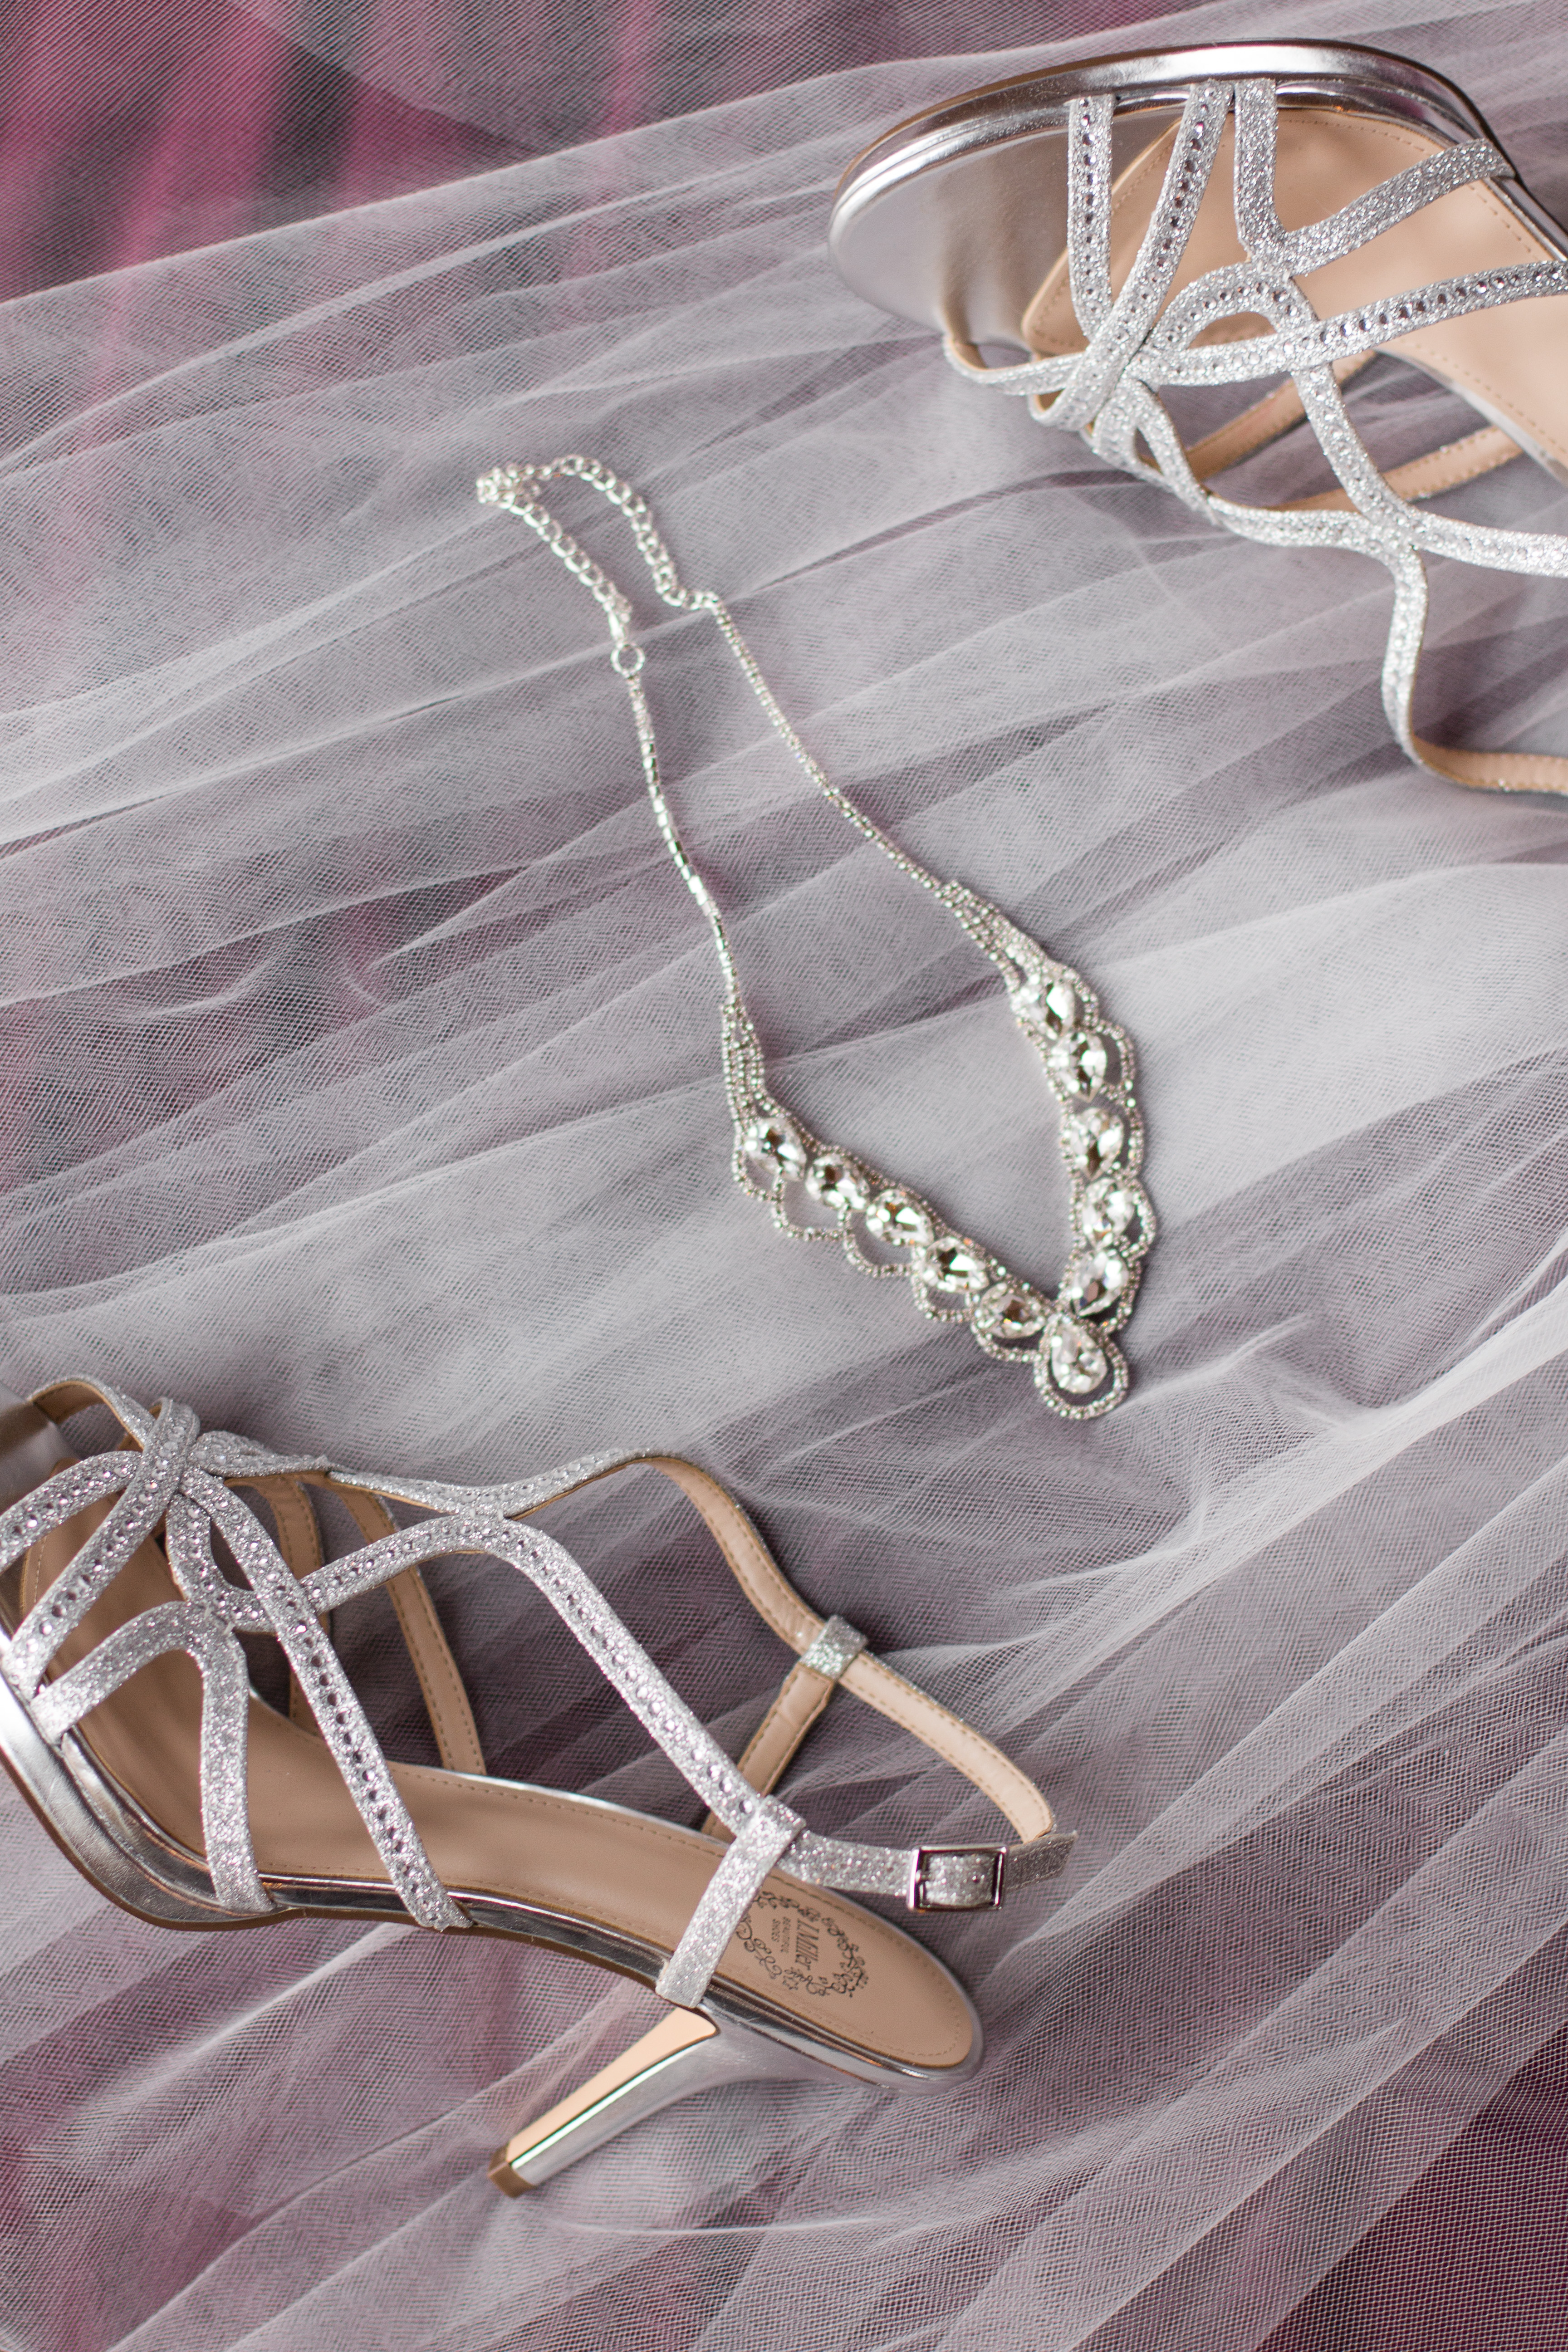 Diamond Necklace Bridal Jewelry - Karen Elise Photography